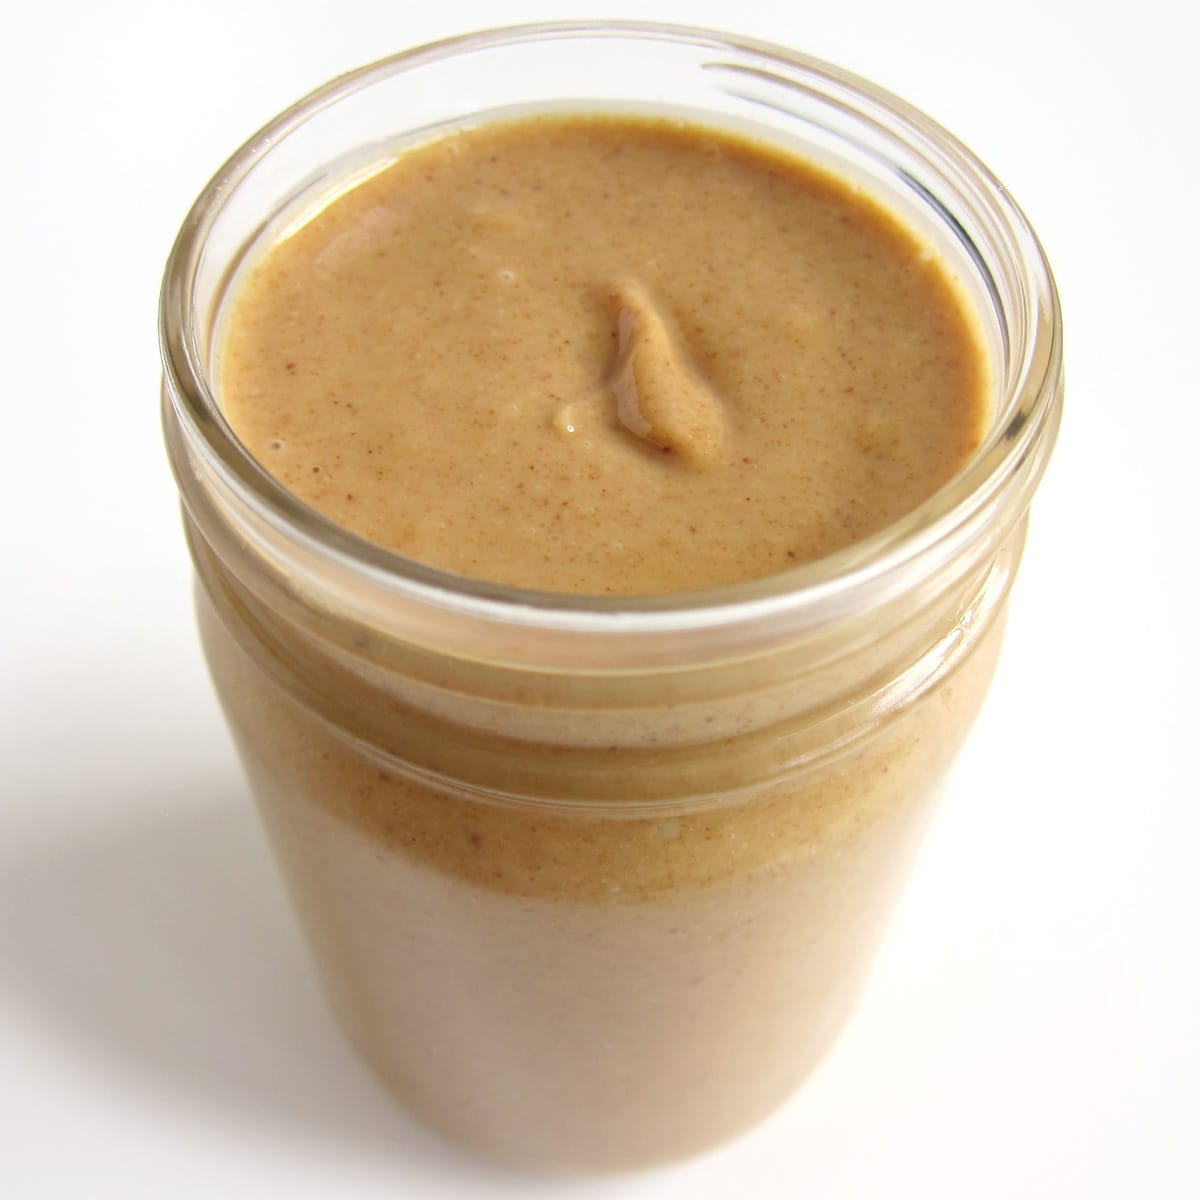 homemade creamy peanut butter in a jar. 